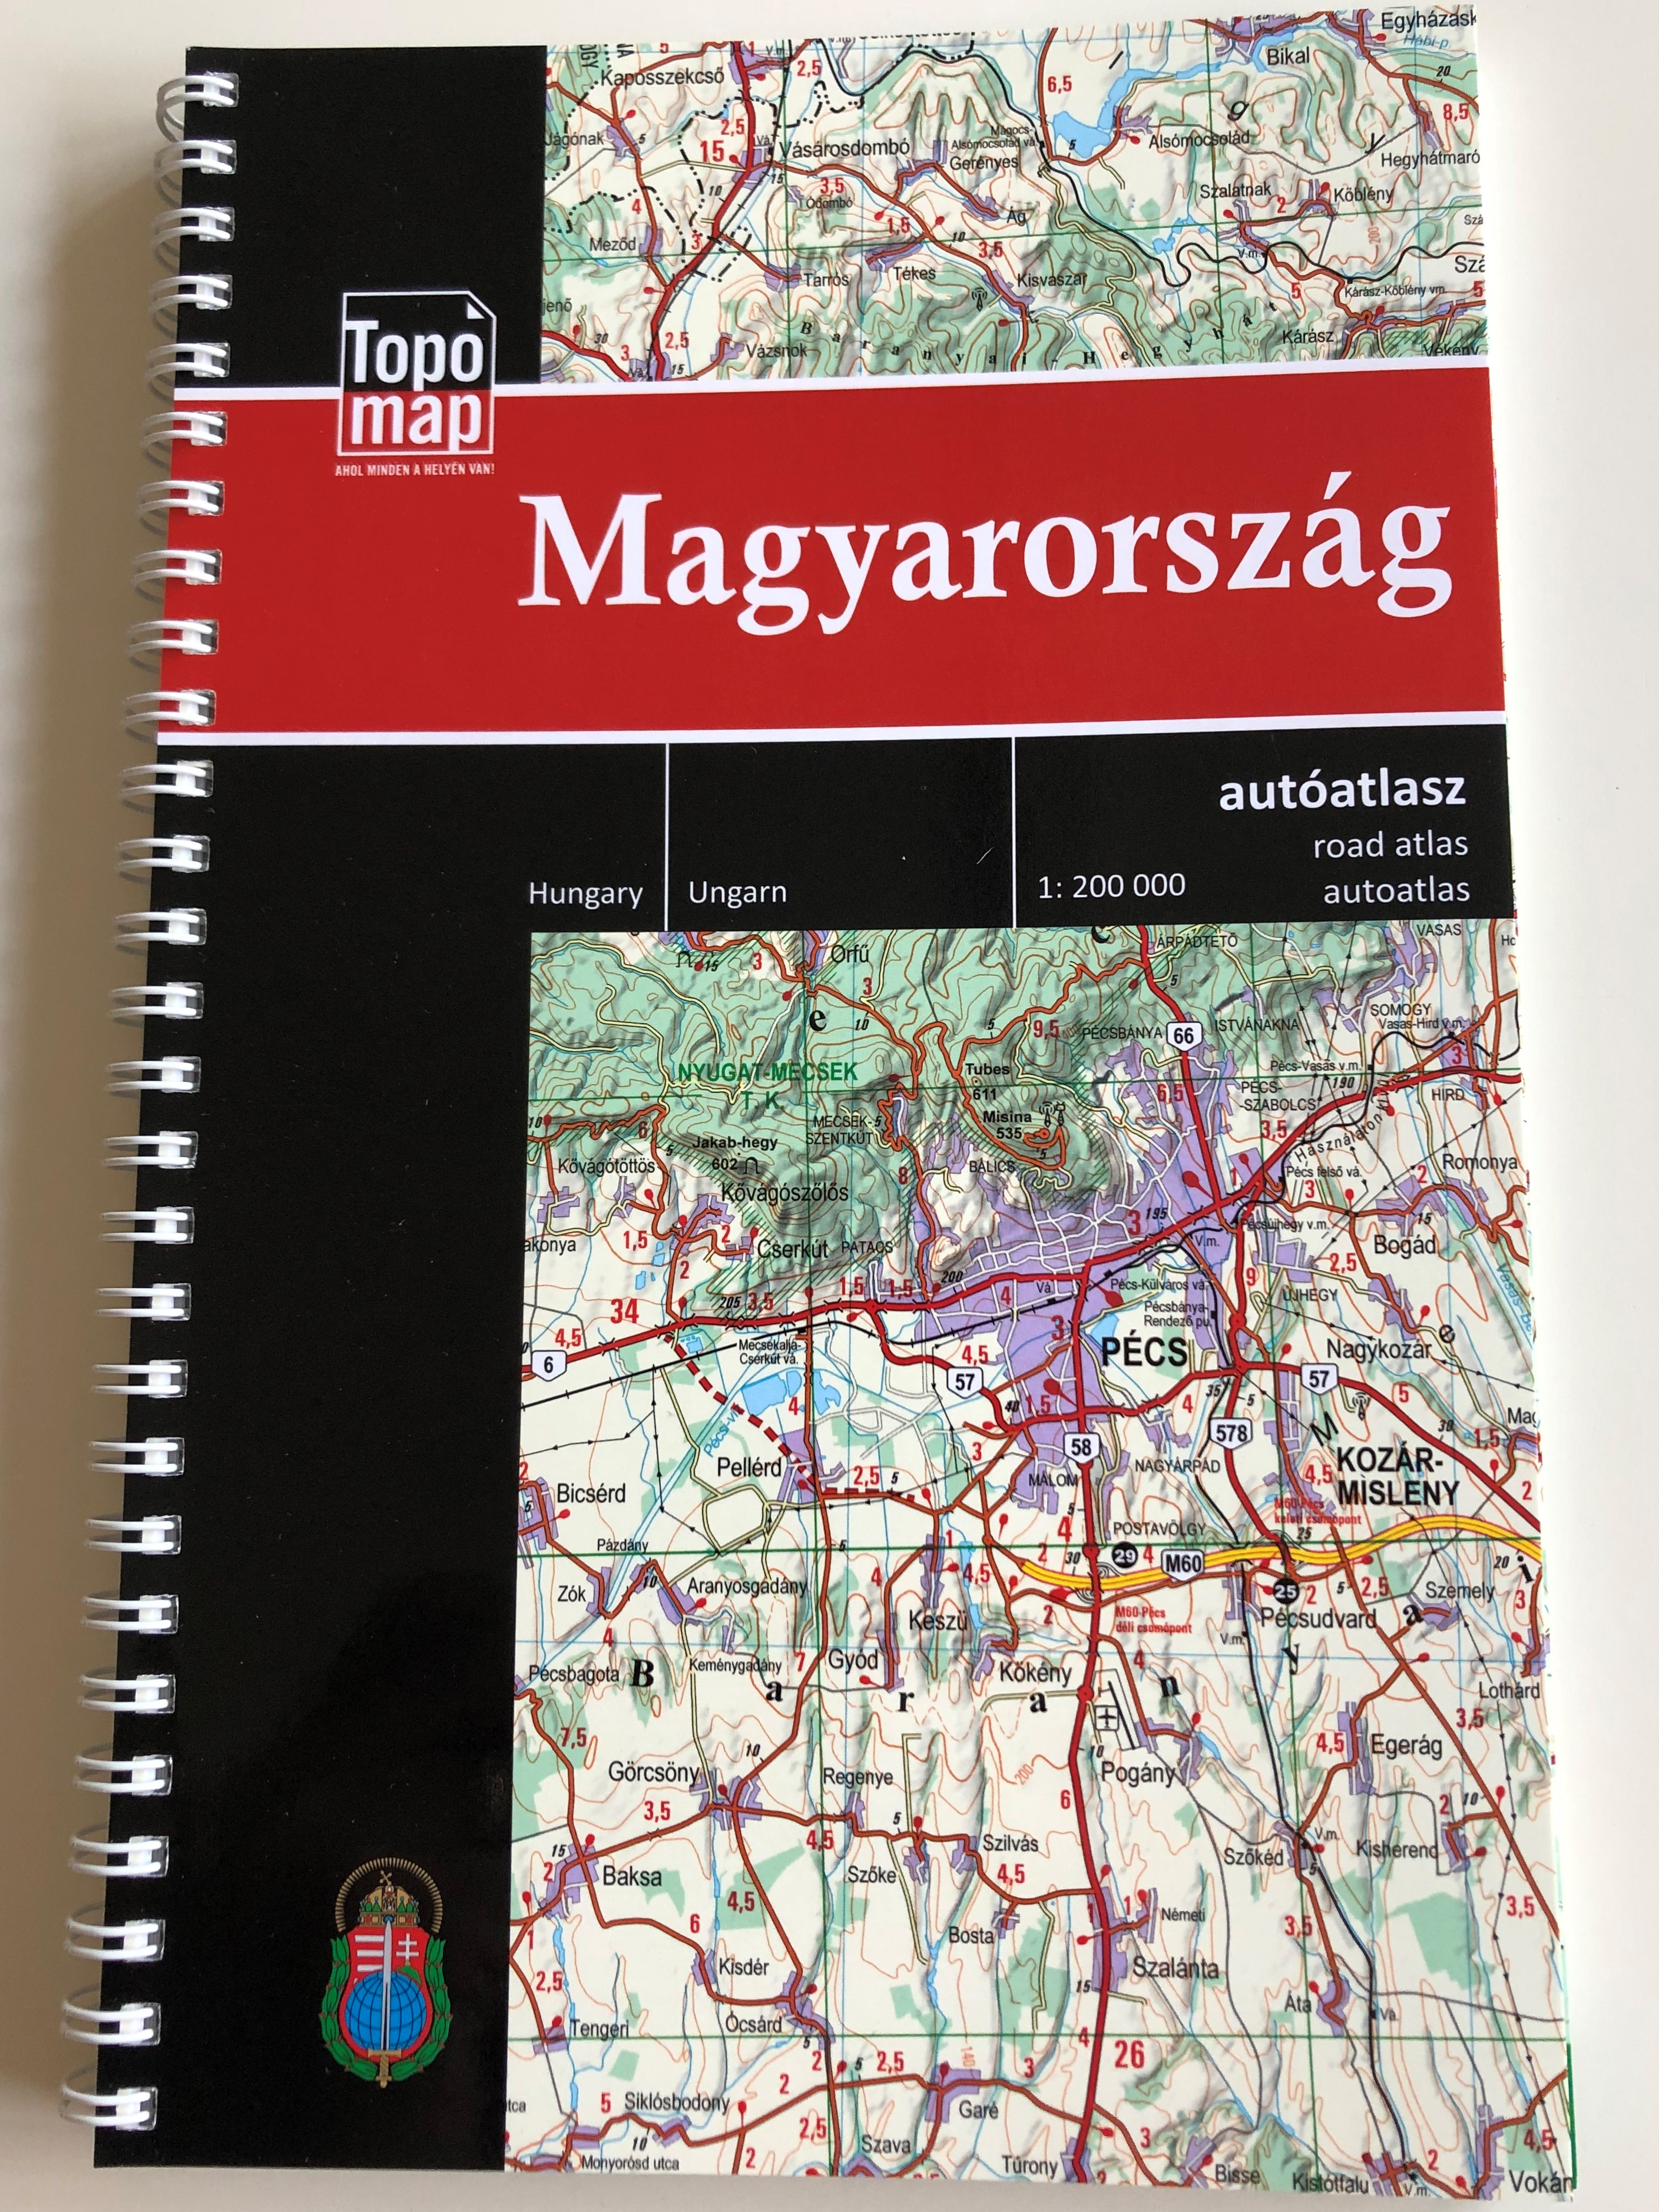 hungary-road-atlas-magyarorsz-g-aut-atlasz-ungarn-autoatlas-topomap-english-german-hungarian-road-atlas-of-hungary-1-200.000-1-.jpg